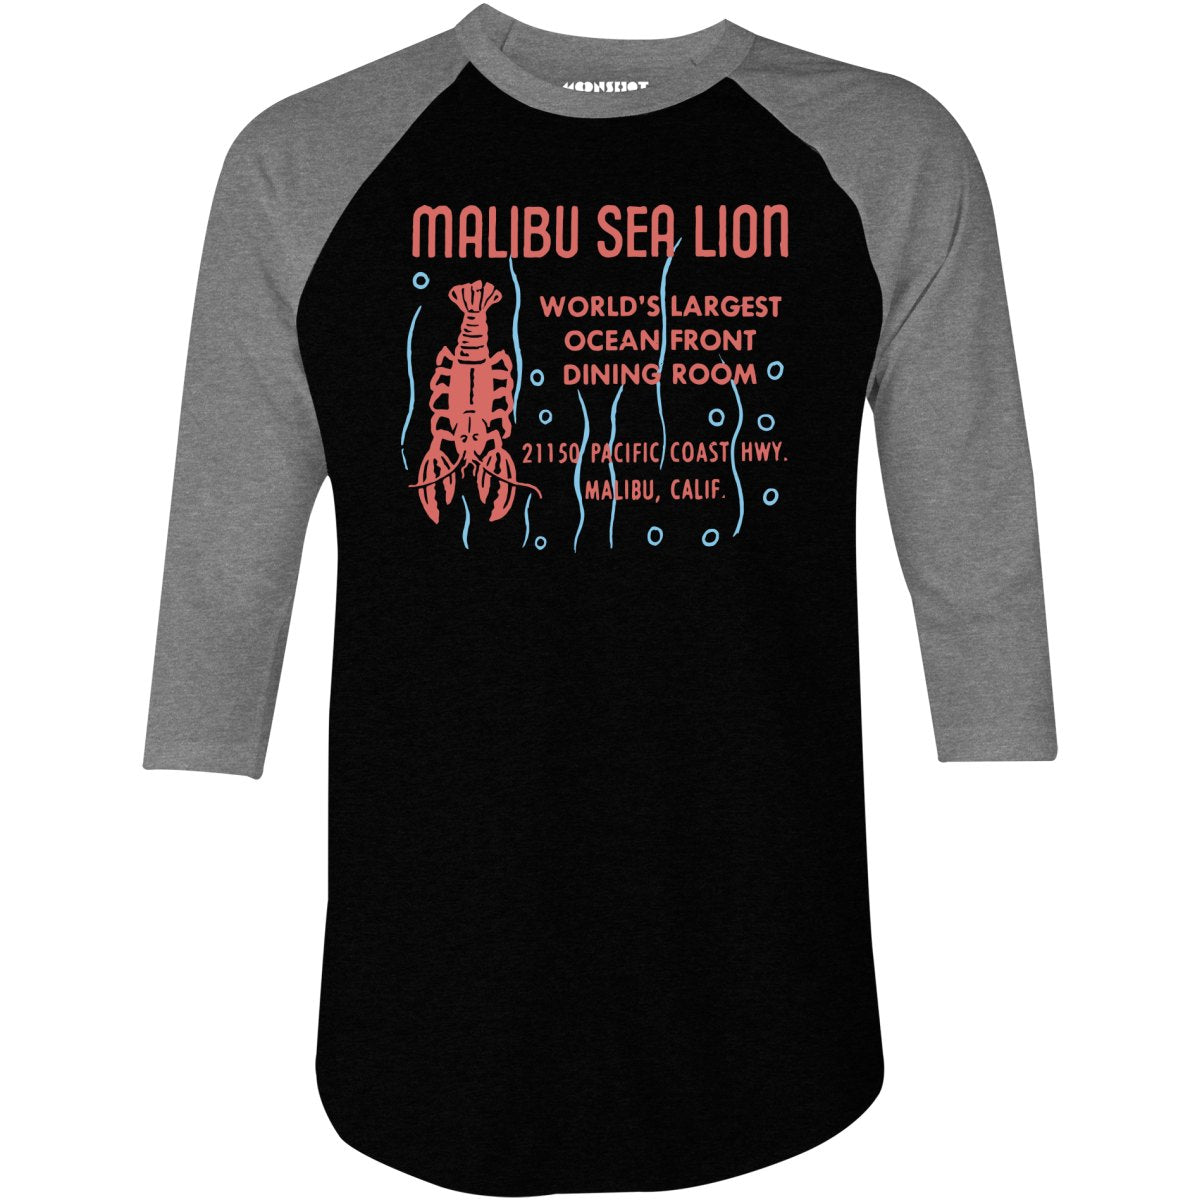 Malibu Sea Lion - Malibu, CA - Vintage Restaurant - 3/4 Sleeve Raglan T-Shirt